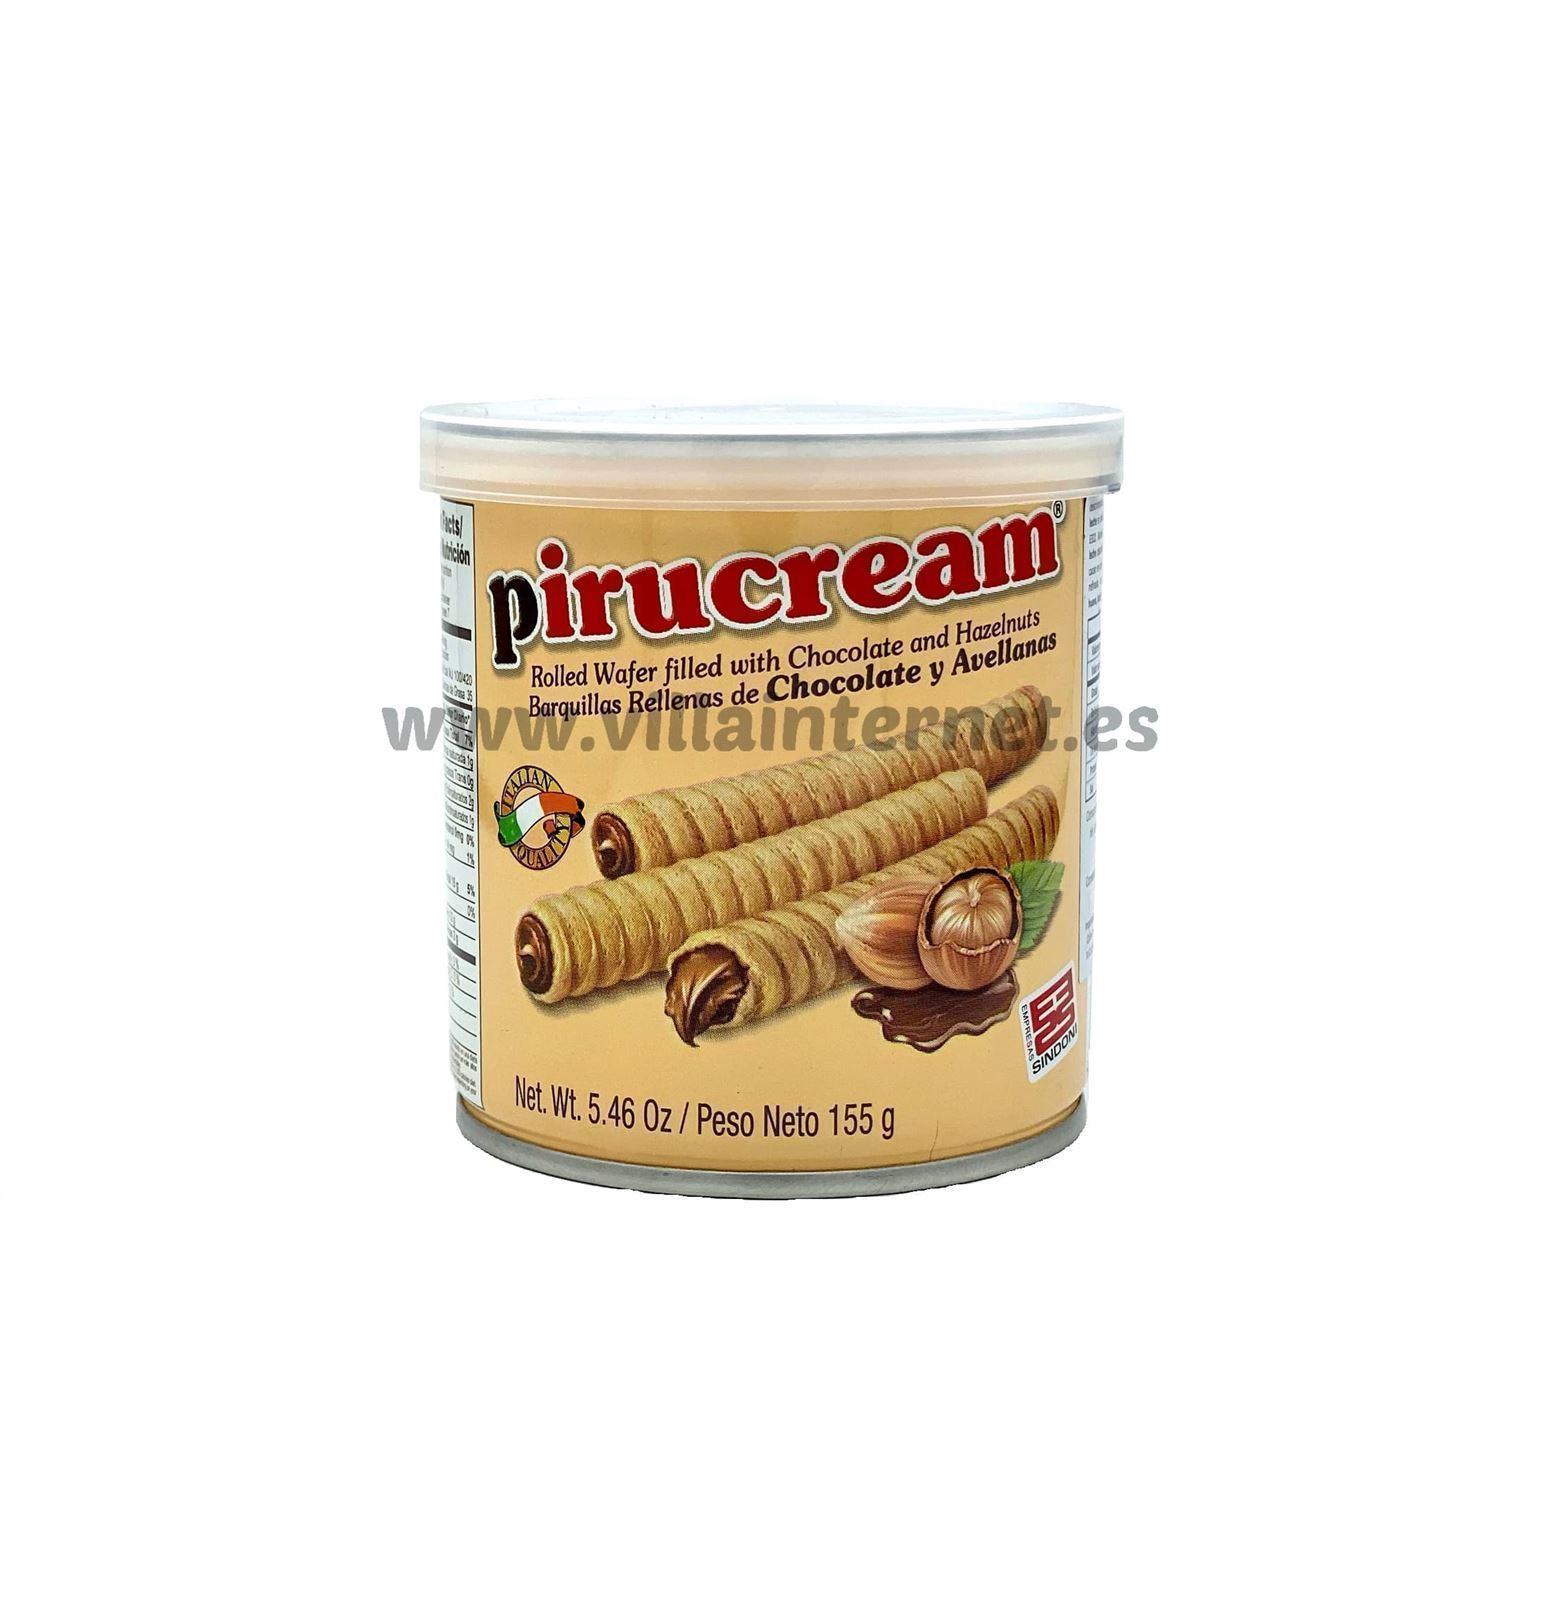 Pirucream sabor chocolate y avellana 155g - Imagen 1